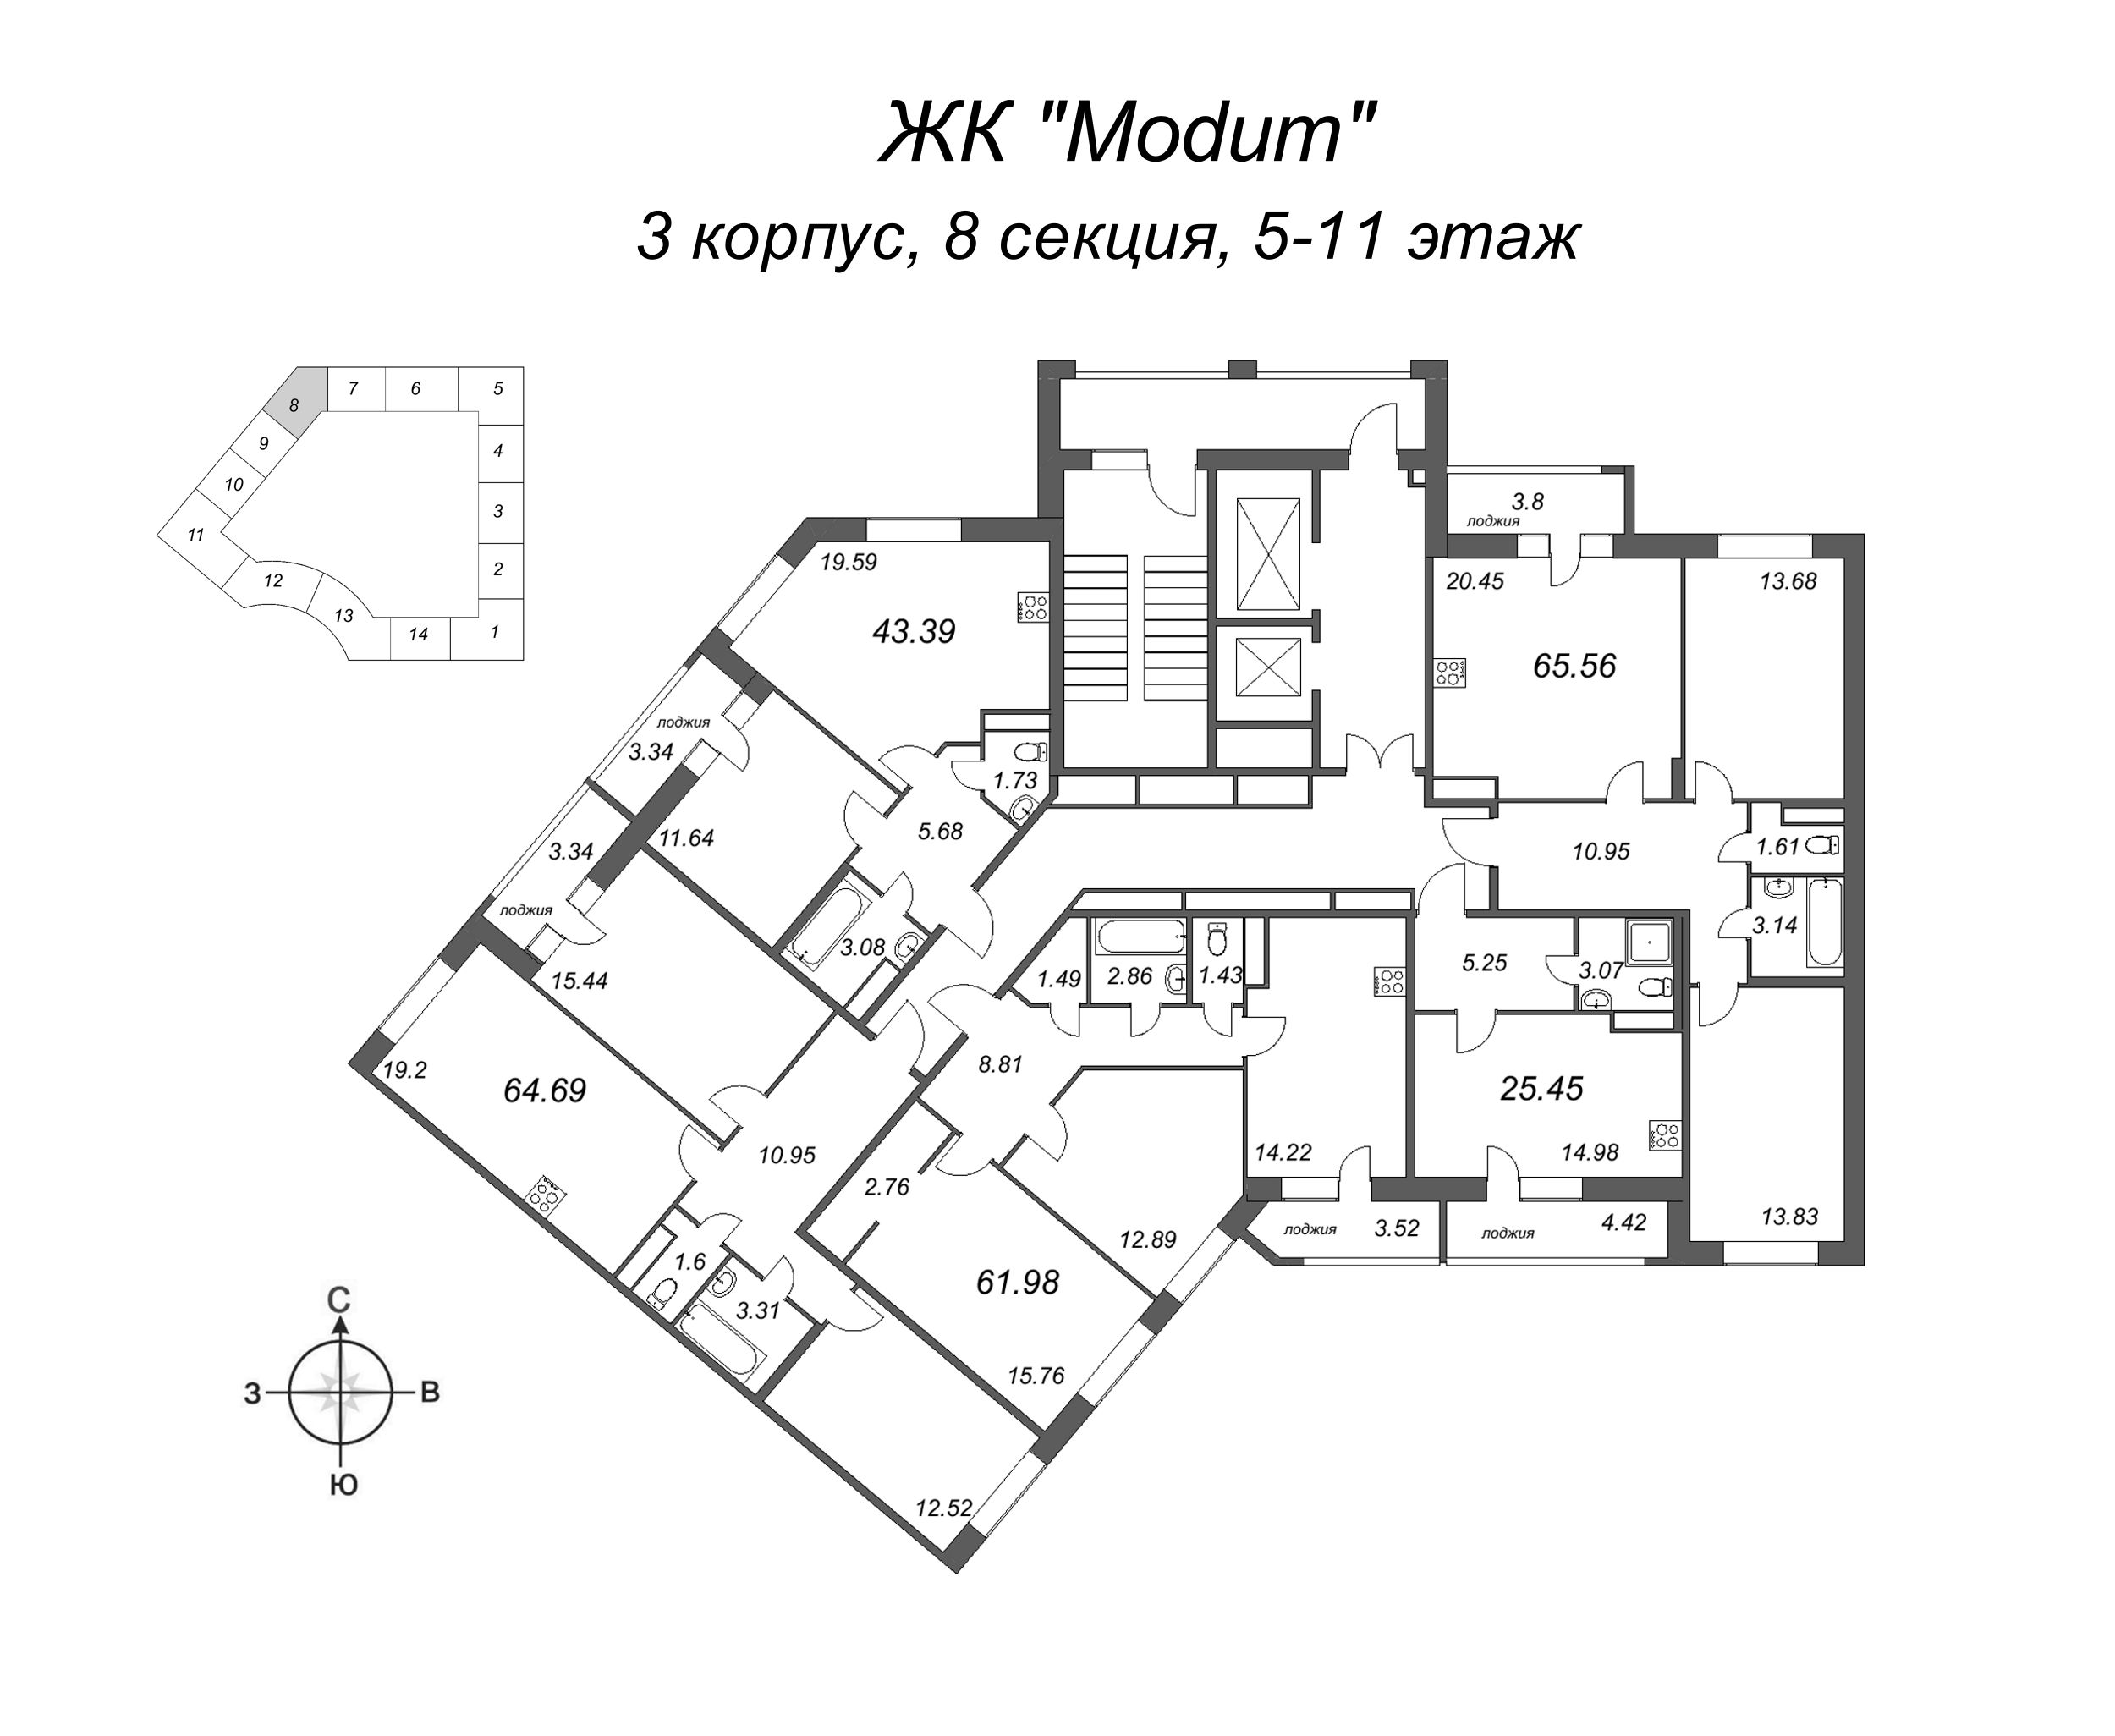 3-комнатная (Евро) квартира, 65.56 м² - планировка этажа